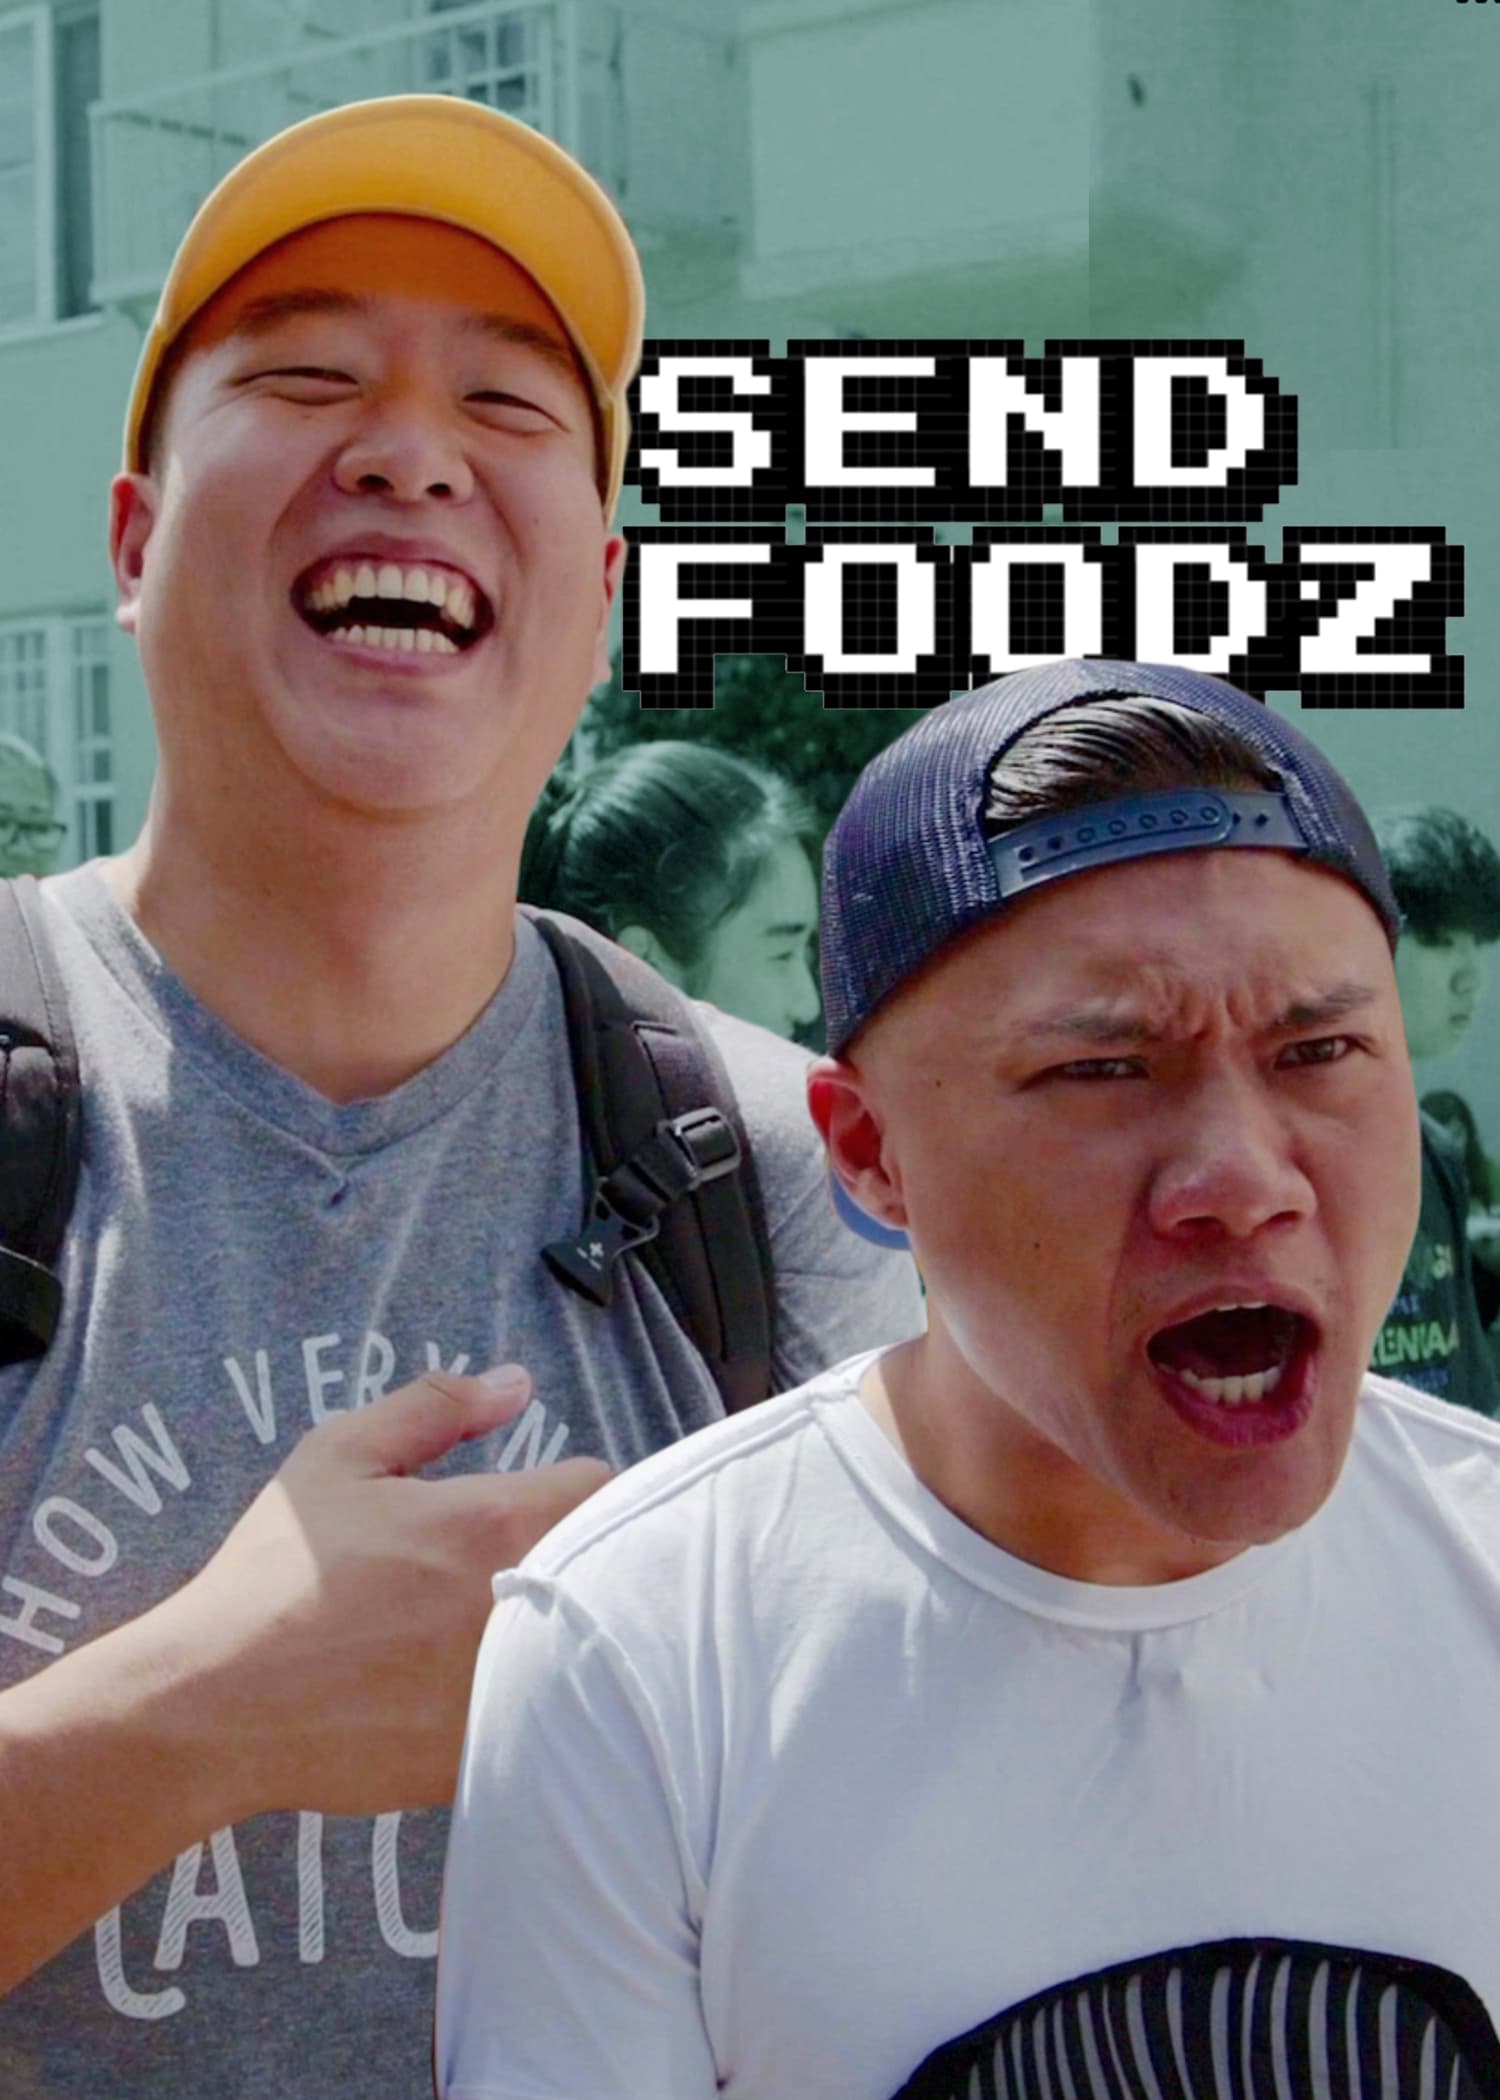 Send Foodz